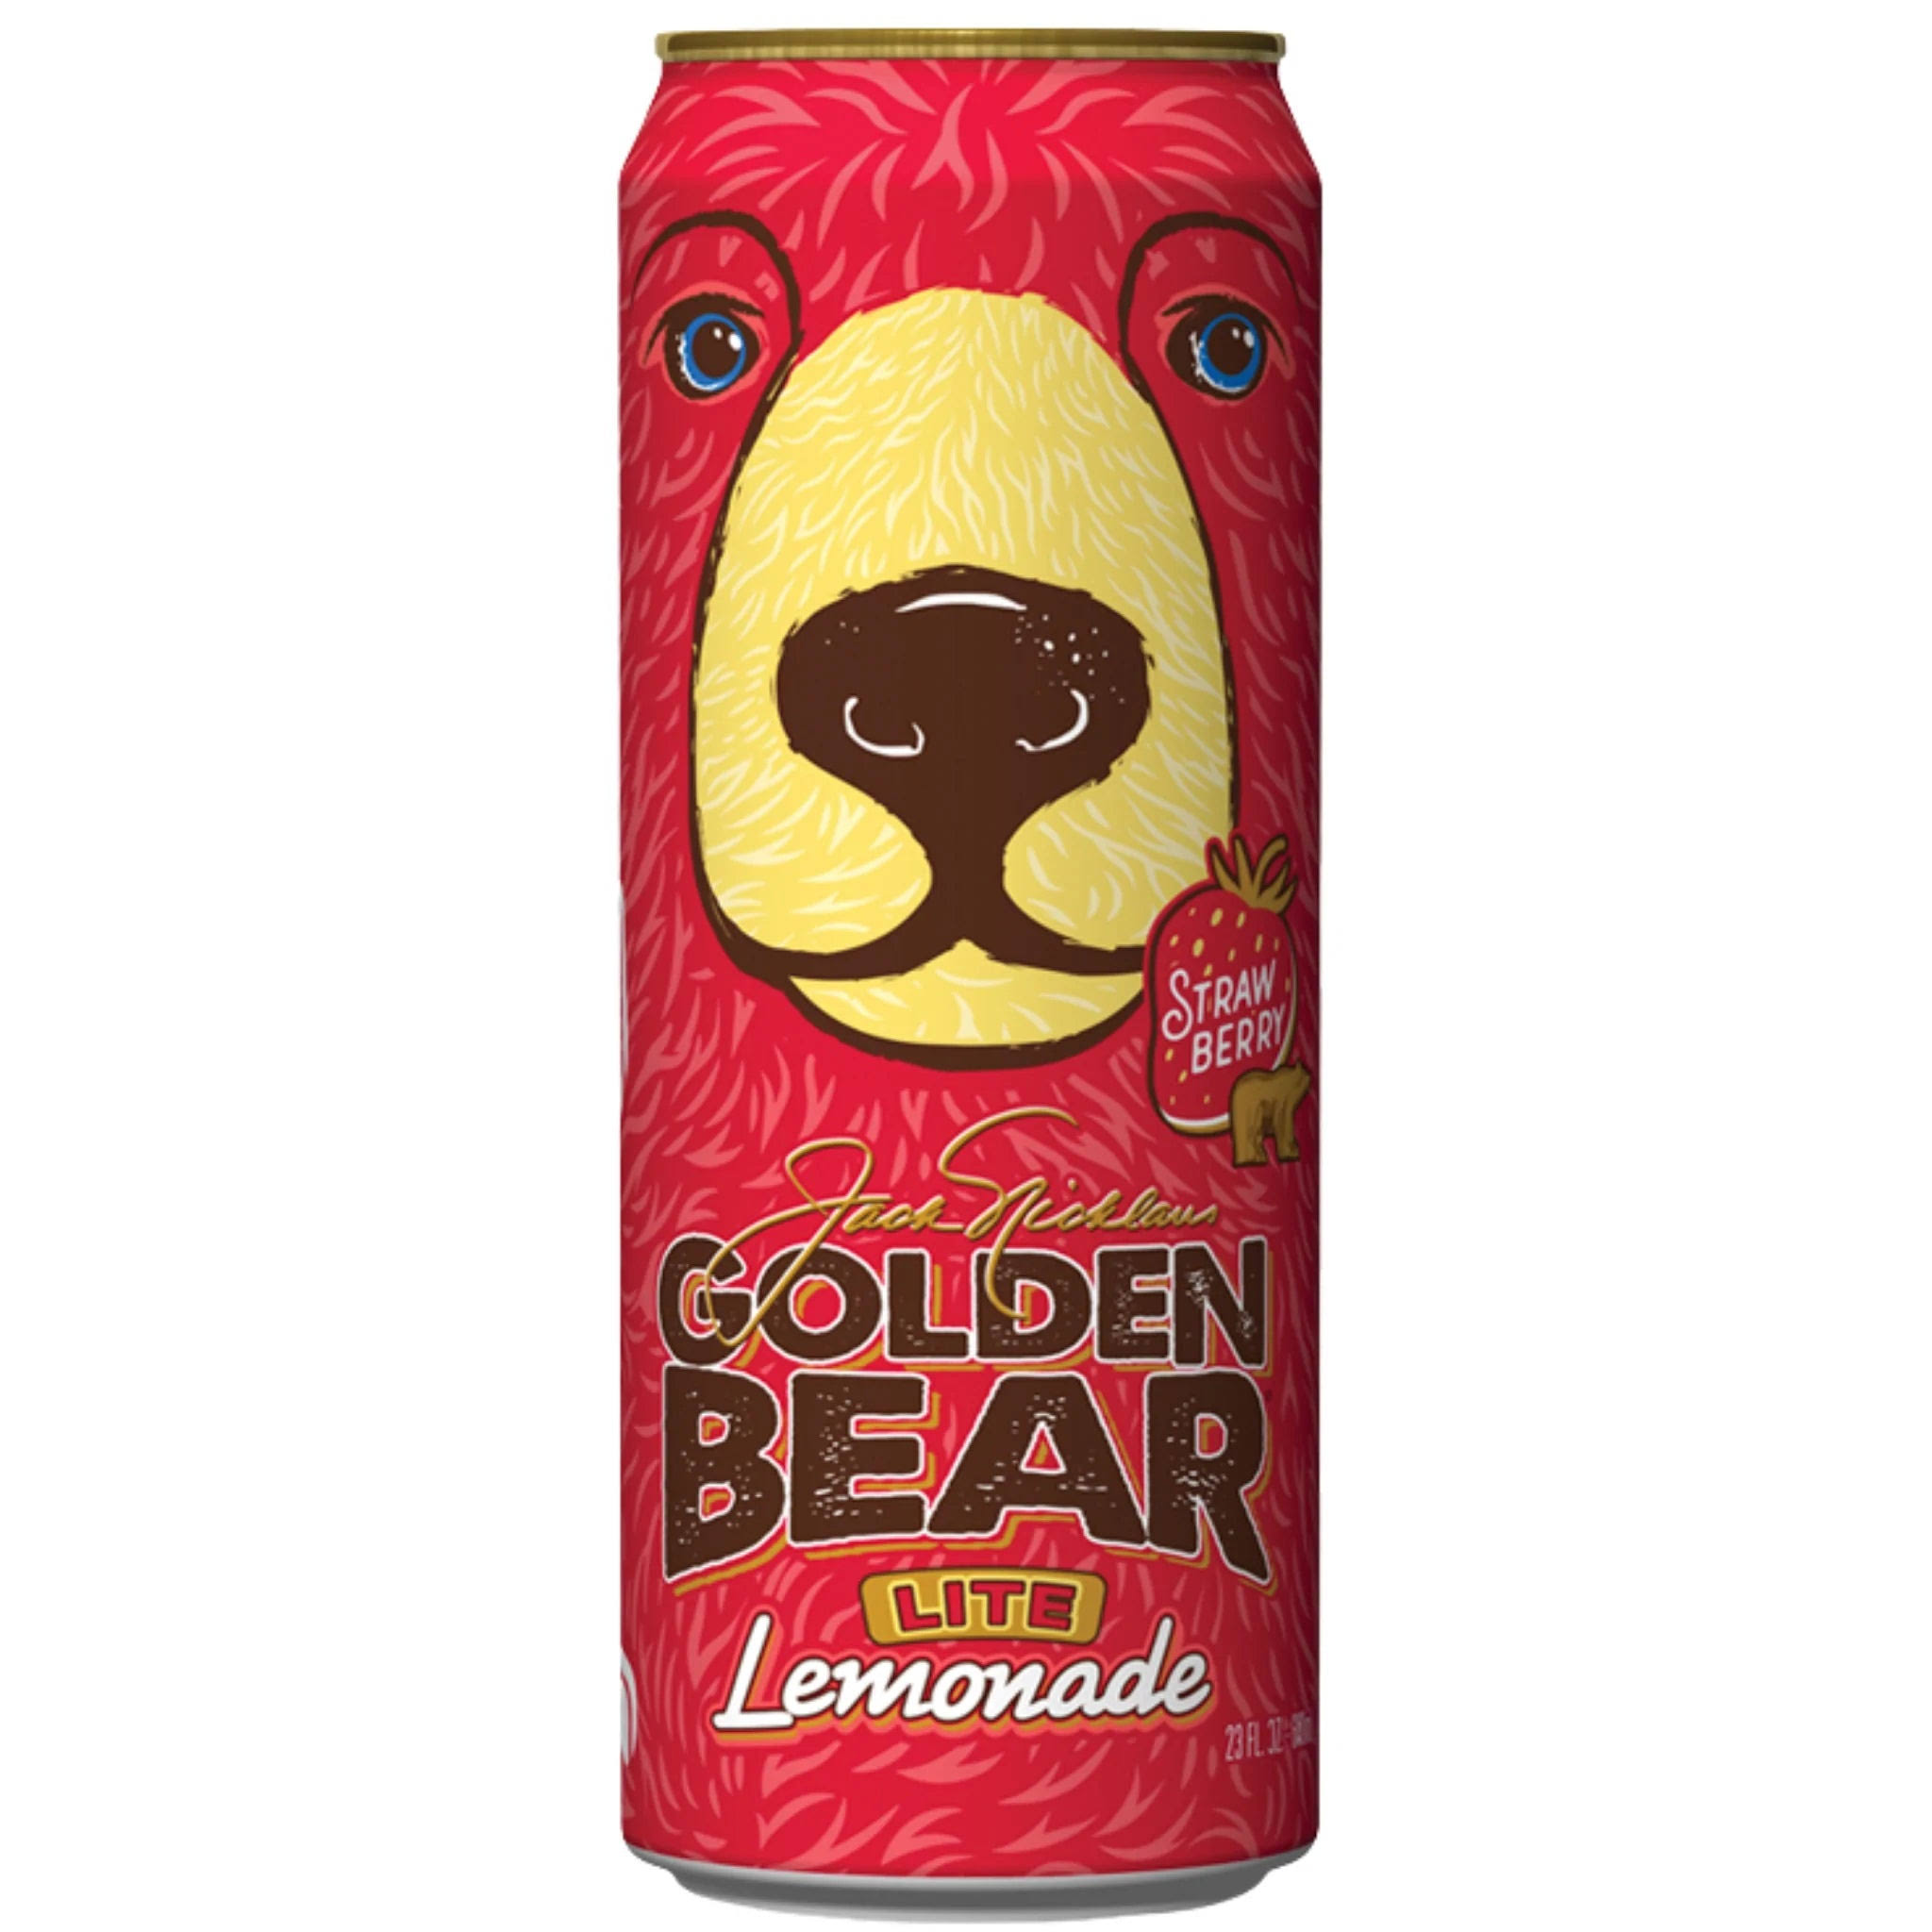 Jack Nicklaus Gold Bear Lemonade - with Strawberry, 23oz